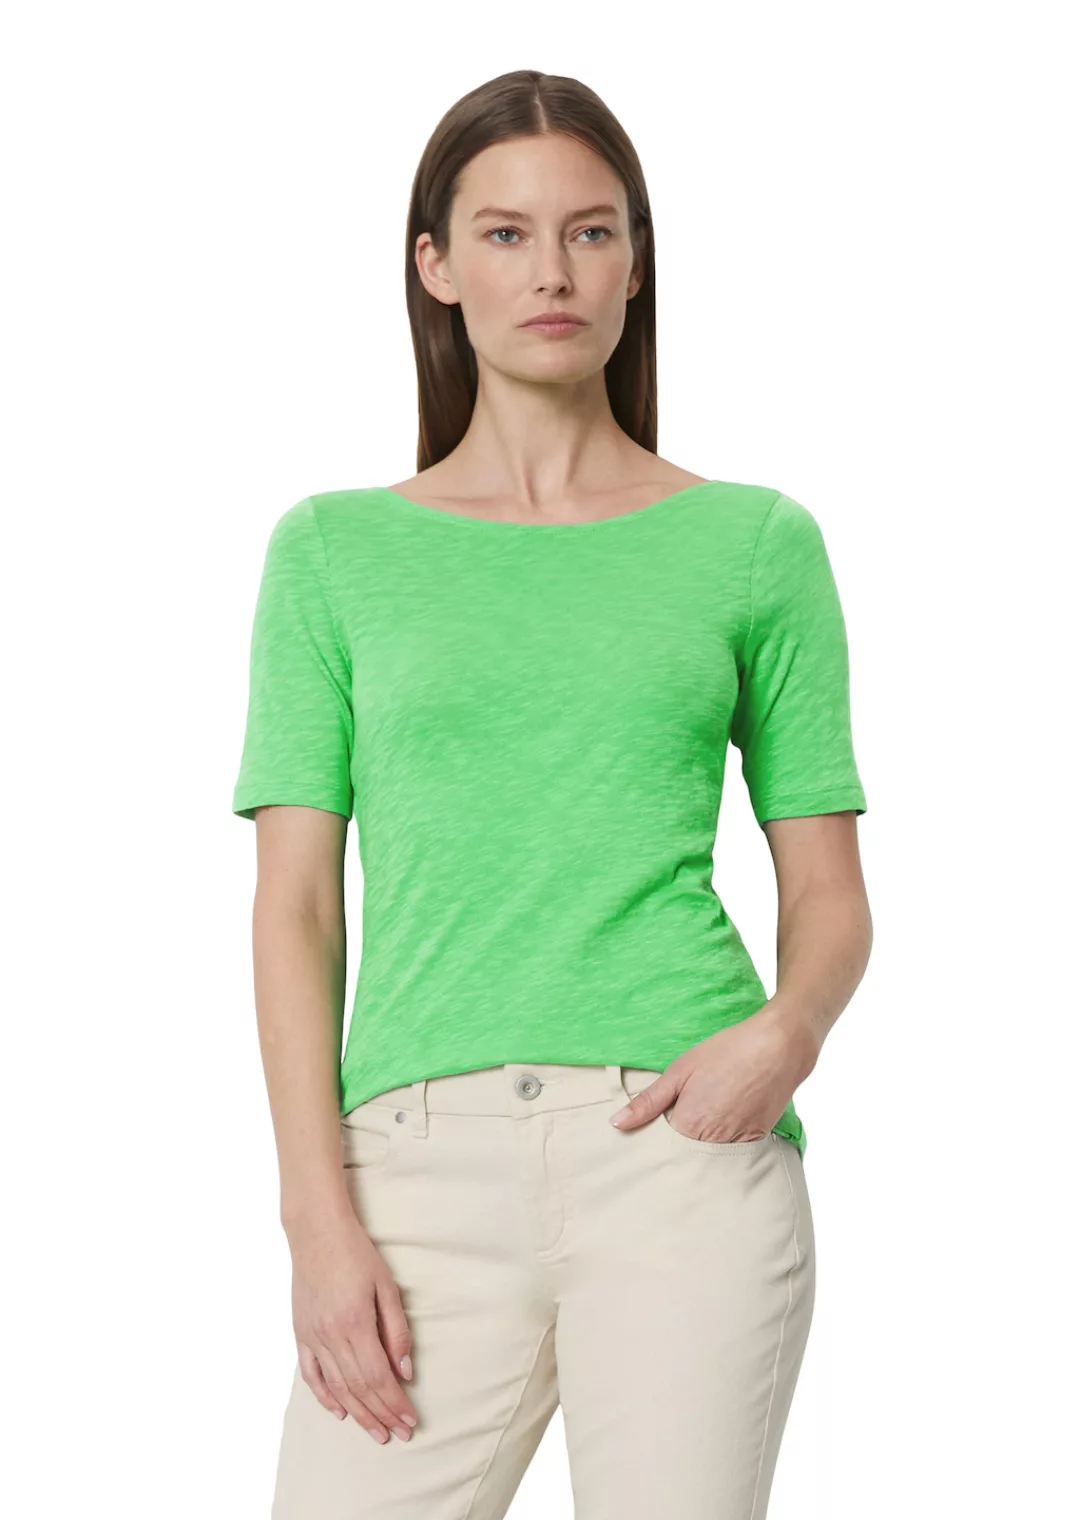 Marc OPolo T-Shirt "T-shirt, short-sleeve, boat-neck" günstig online kaufen